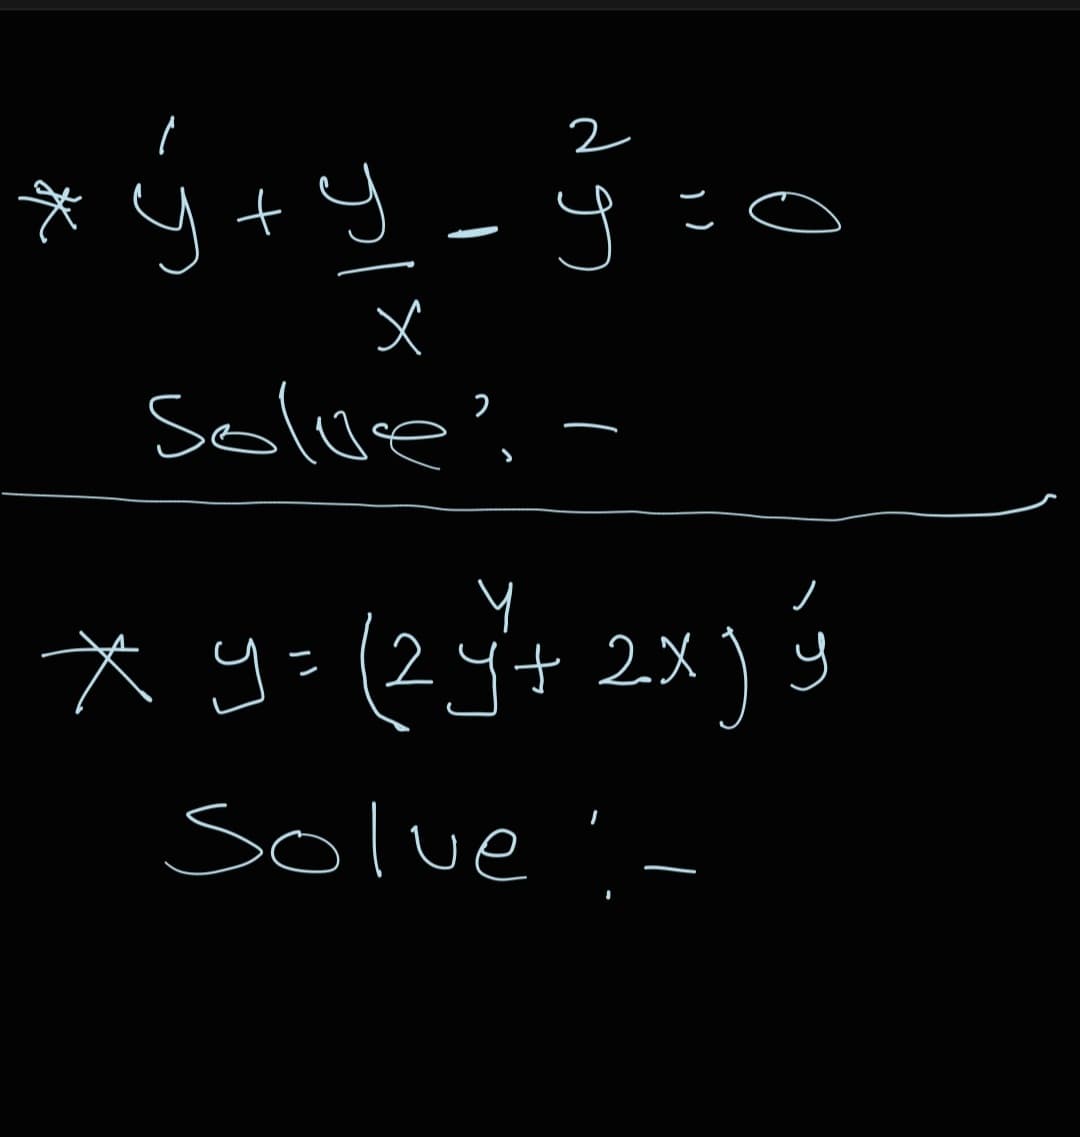 *+リ-5
2
y +y
Solve:-
x y=(2j+2x) ý
solue
